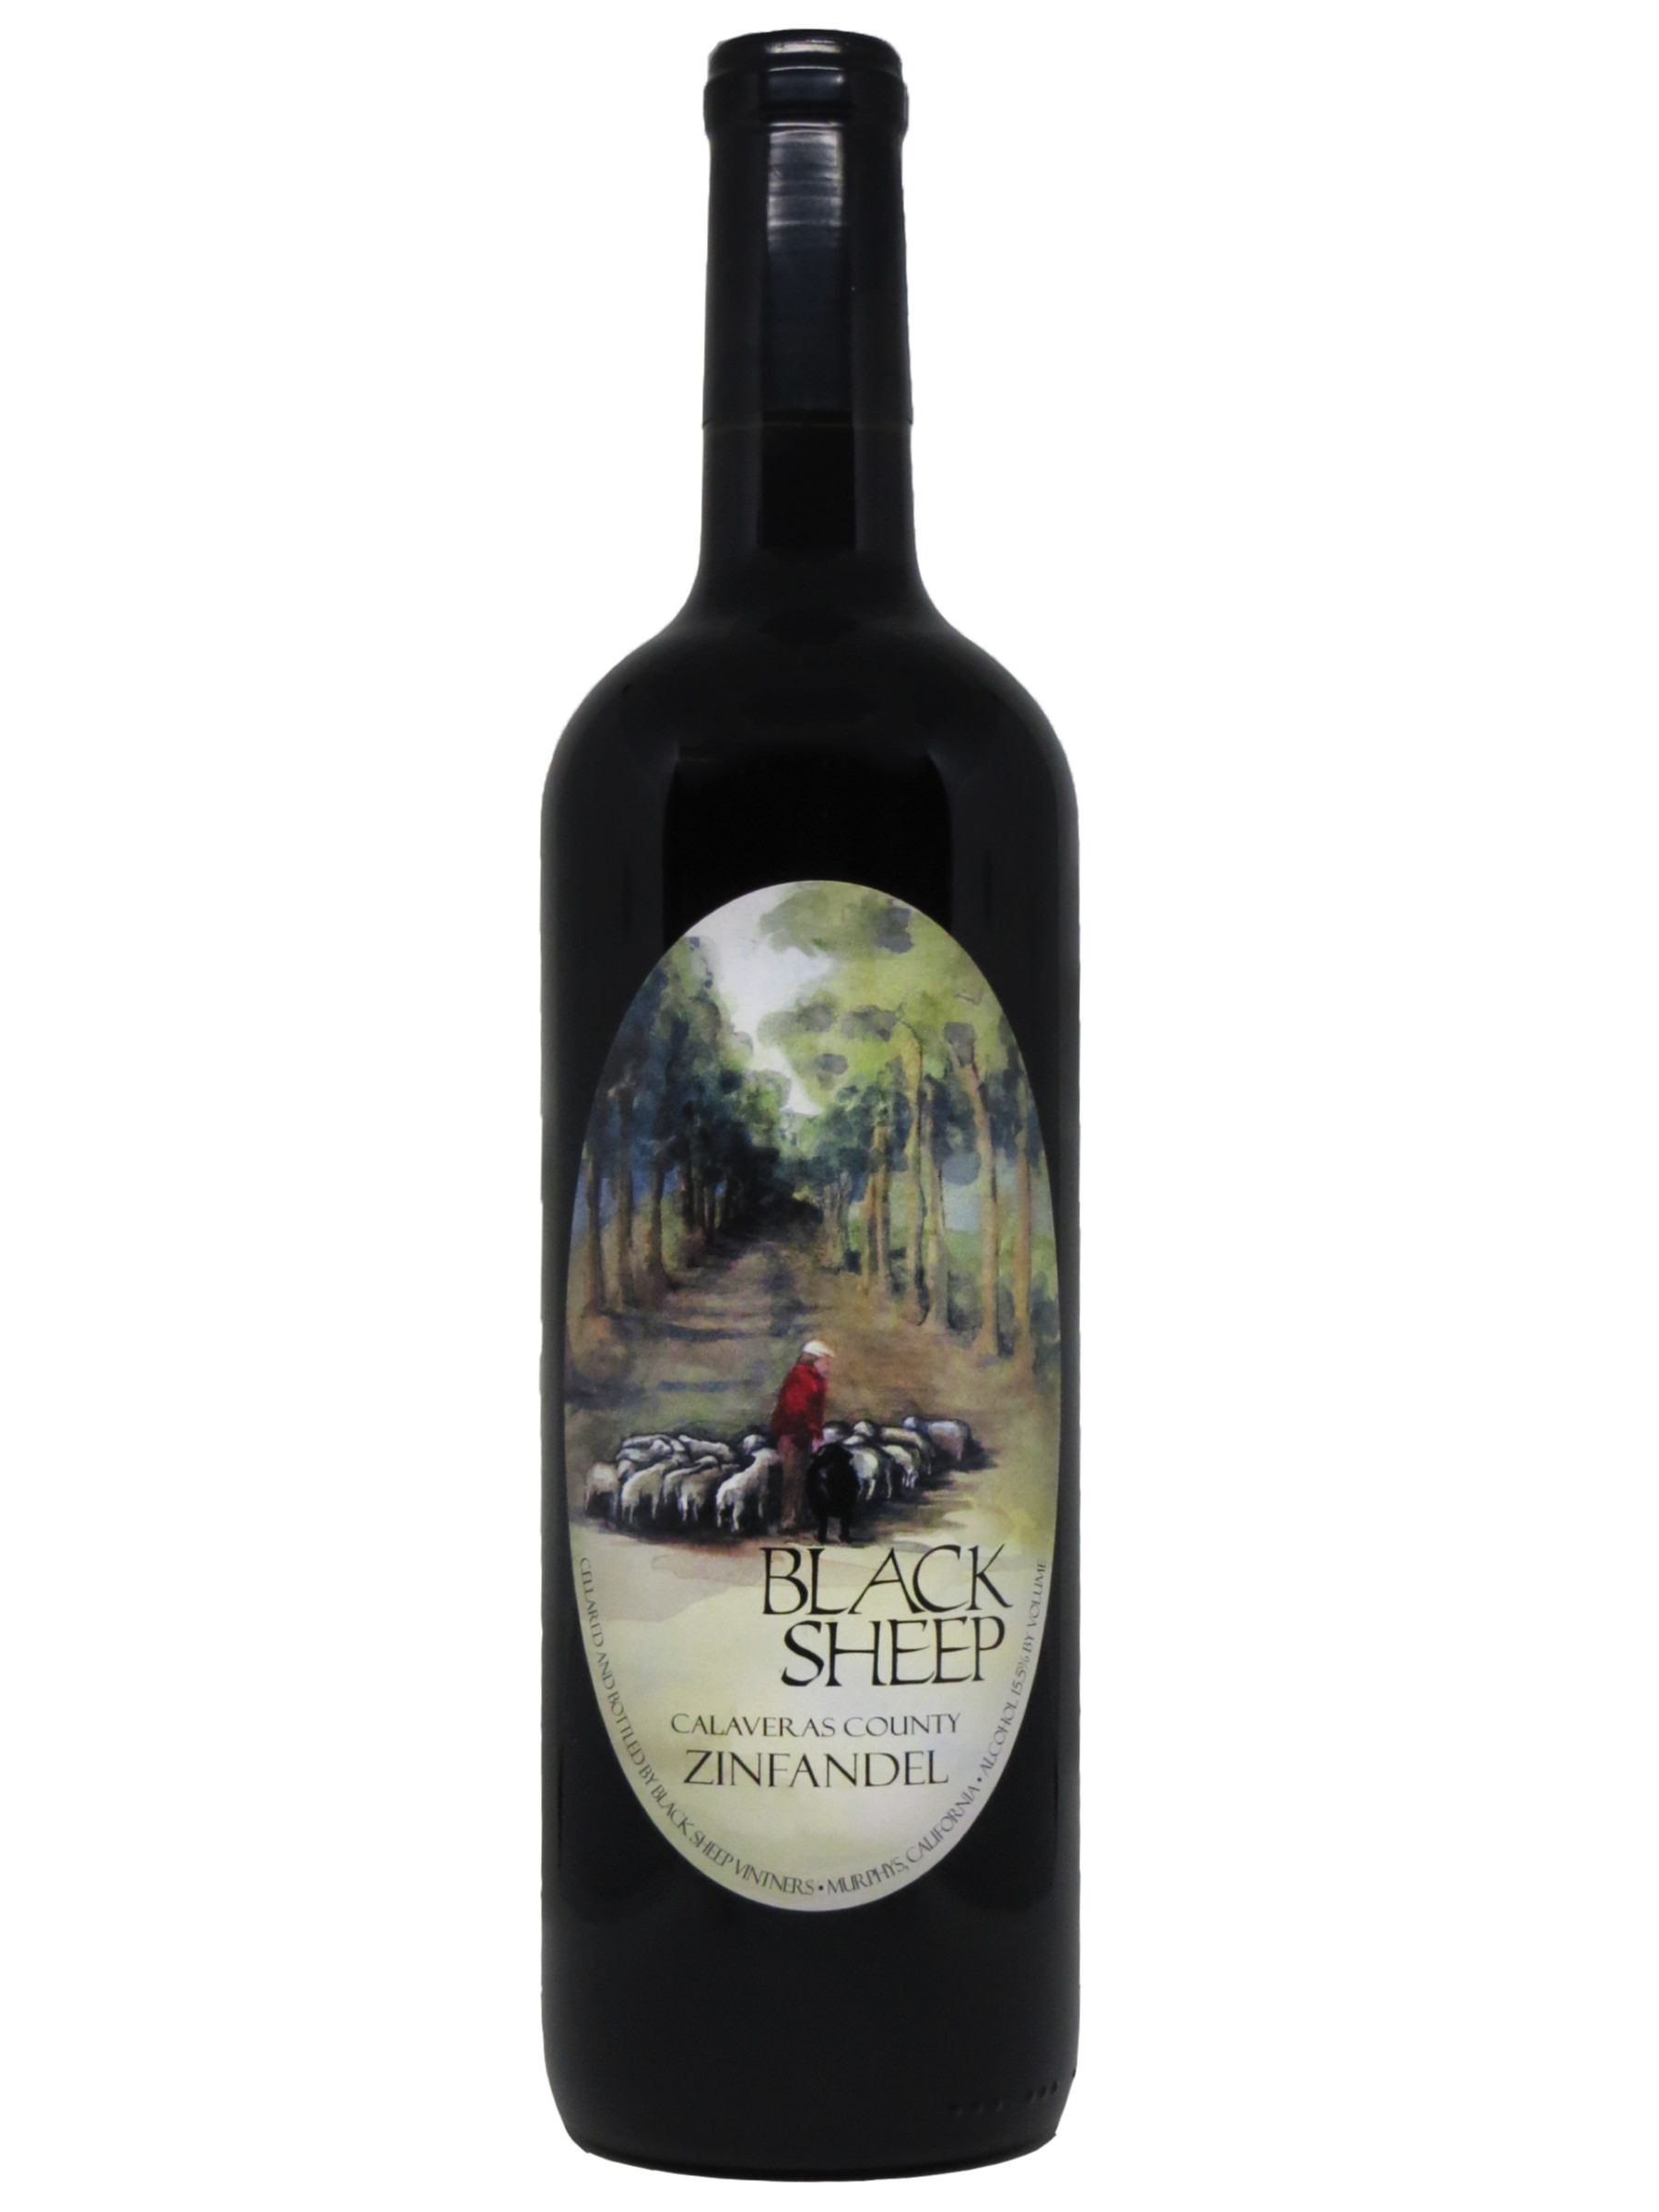 Amador County Fair winning bottle of Black Sheep Winery's Calaveras County Zinfandel